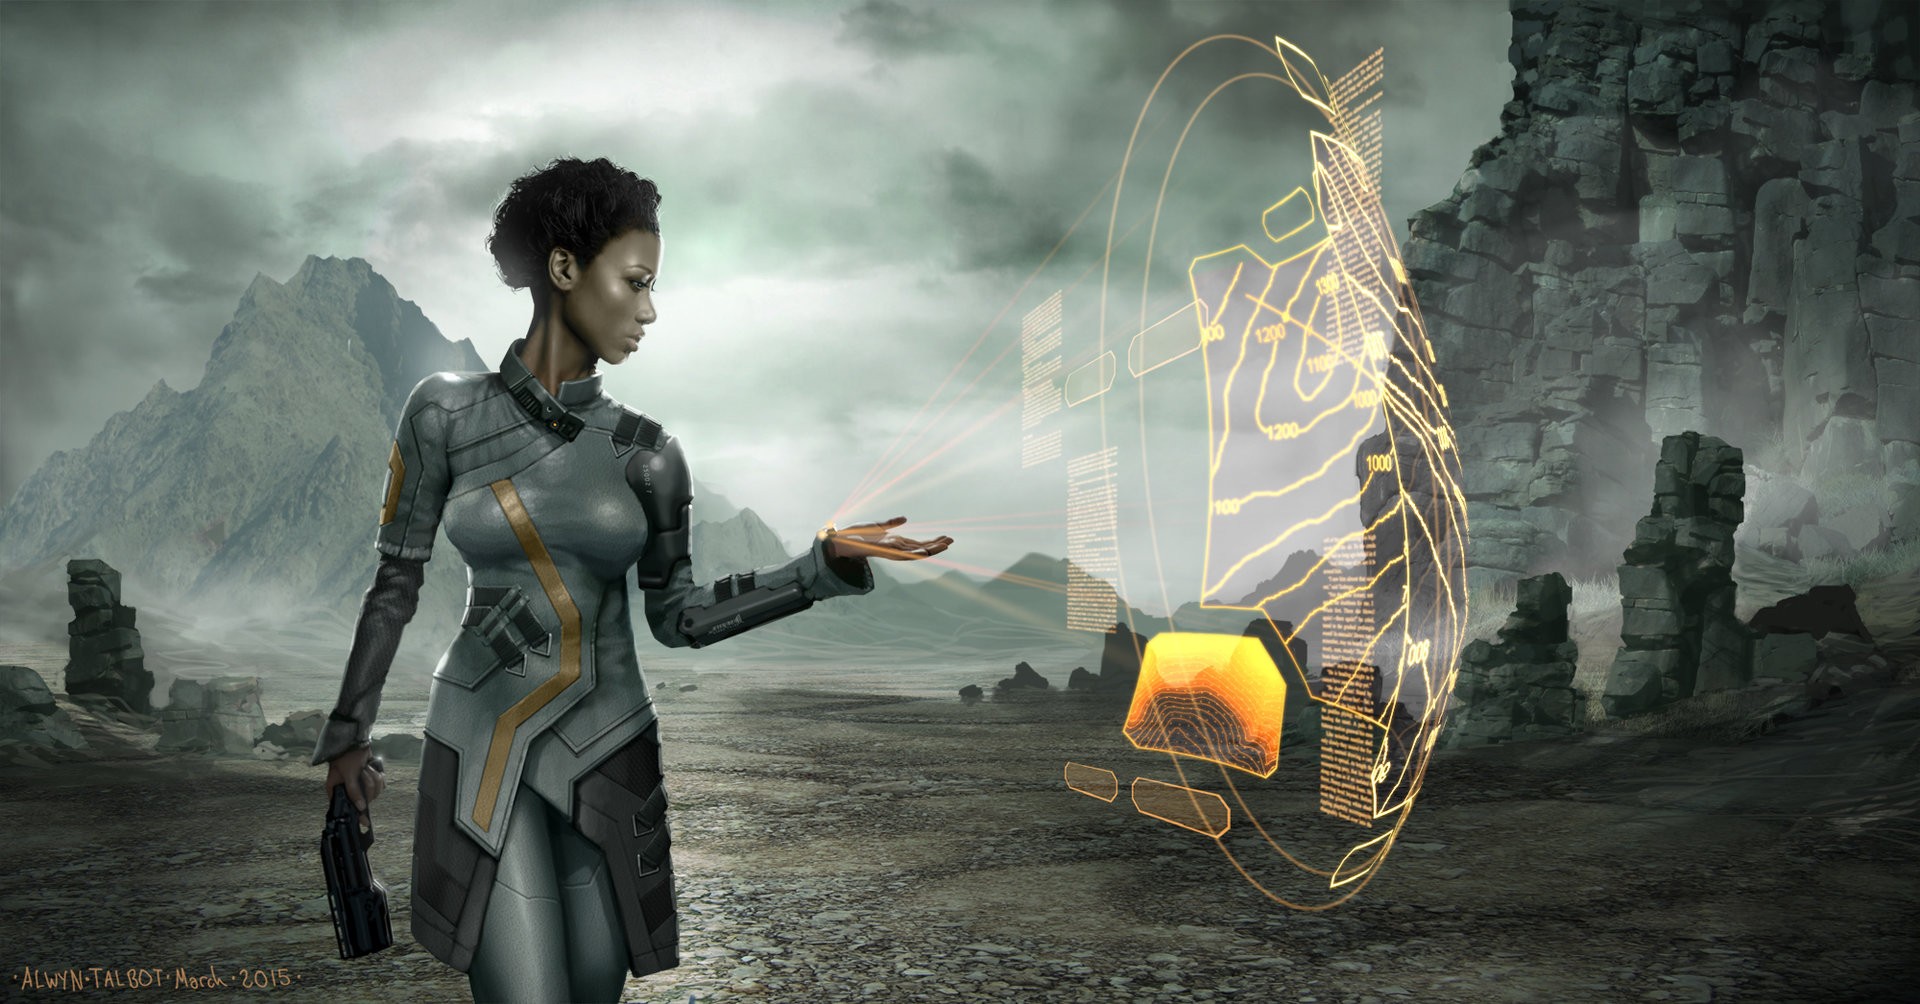 Cyberpunk Futuristic Women Digital Art 2015 Year 1920x1004